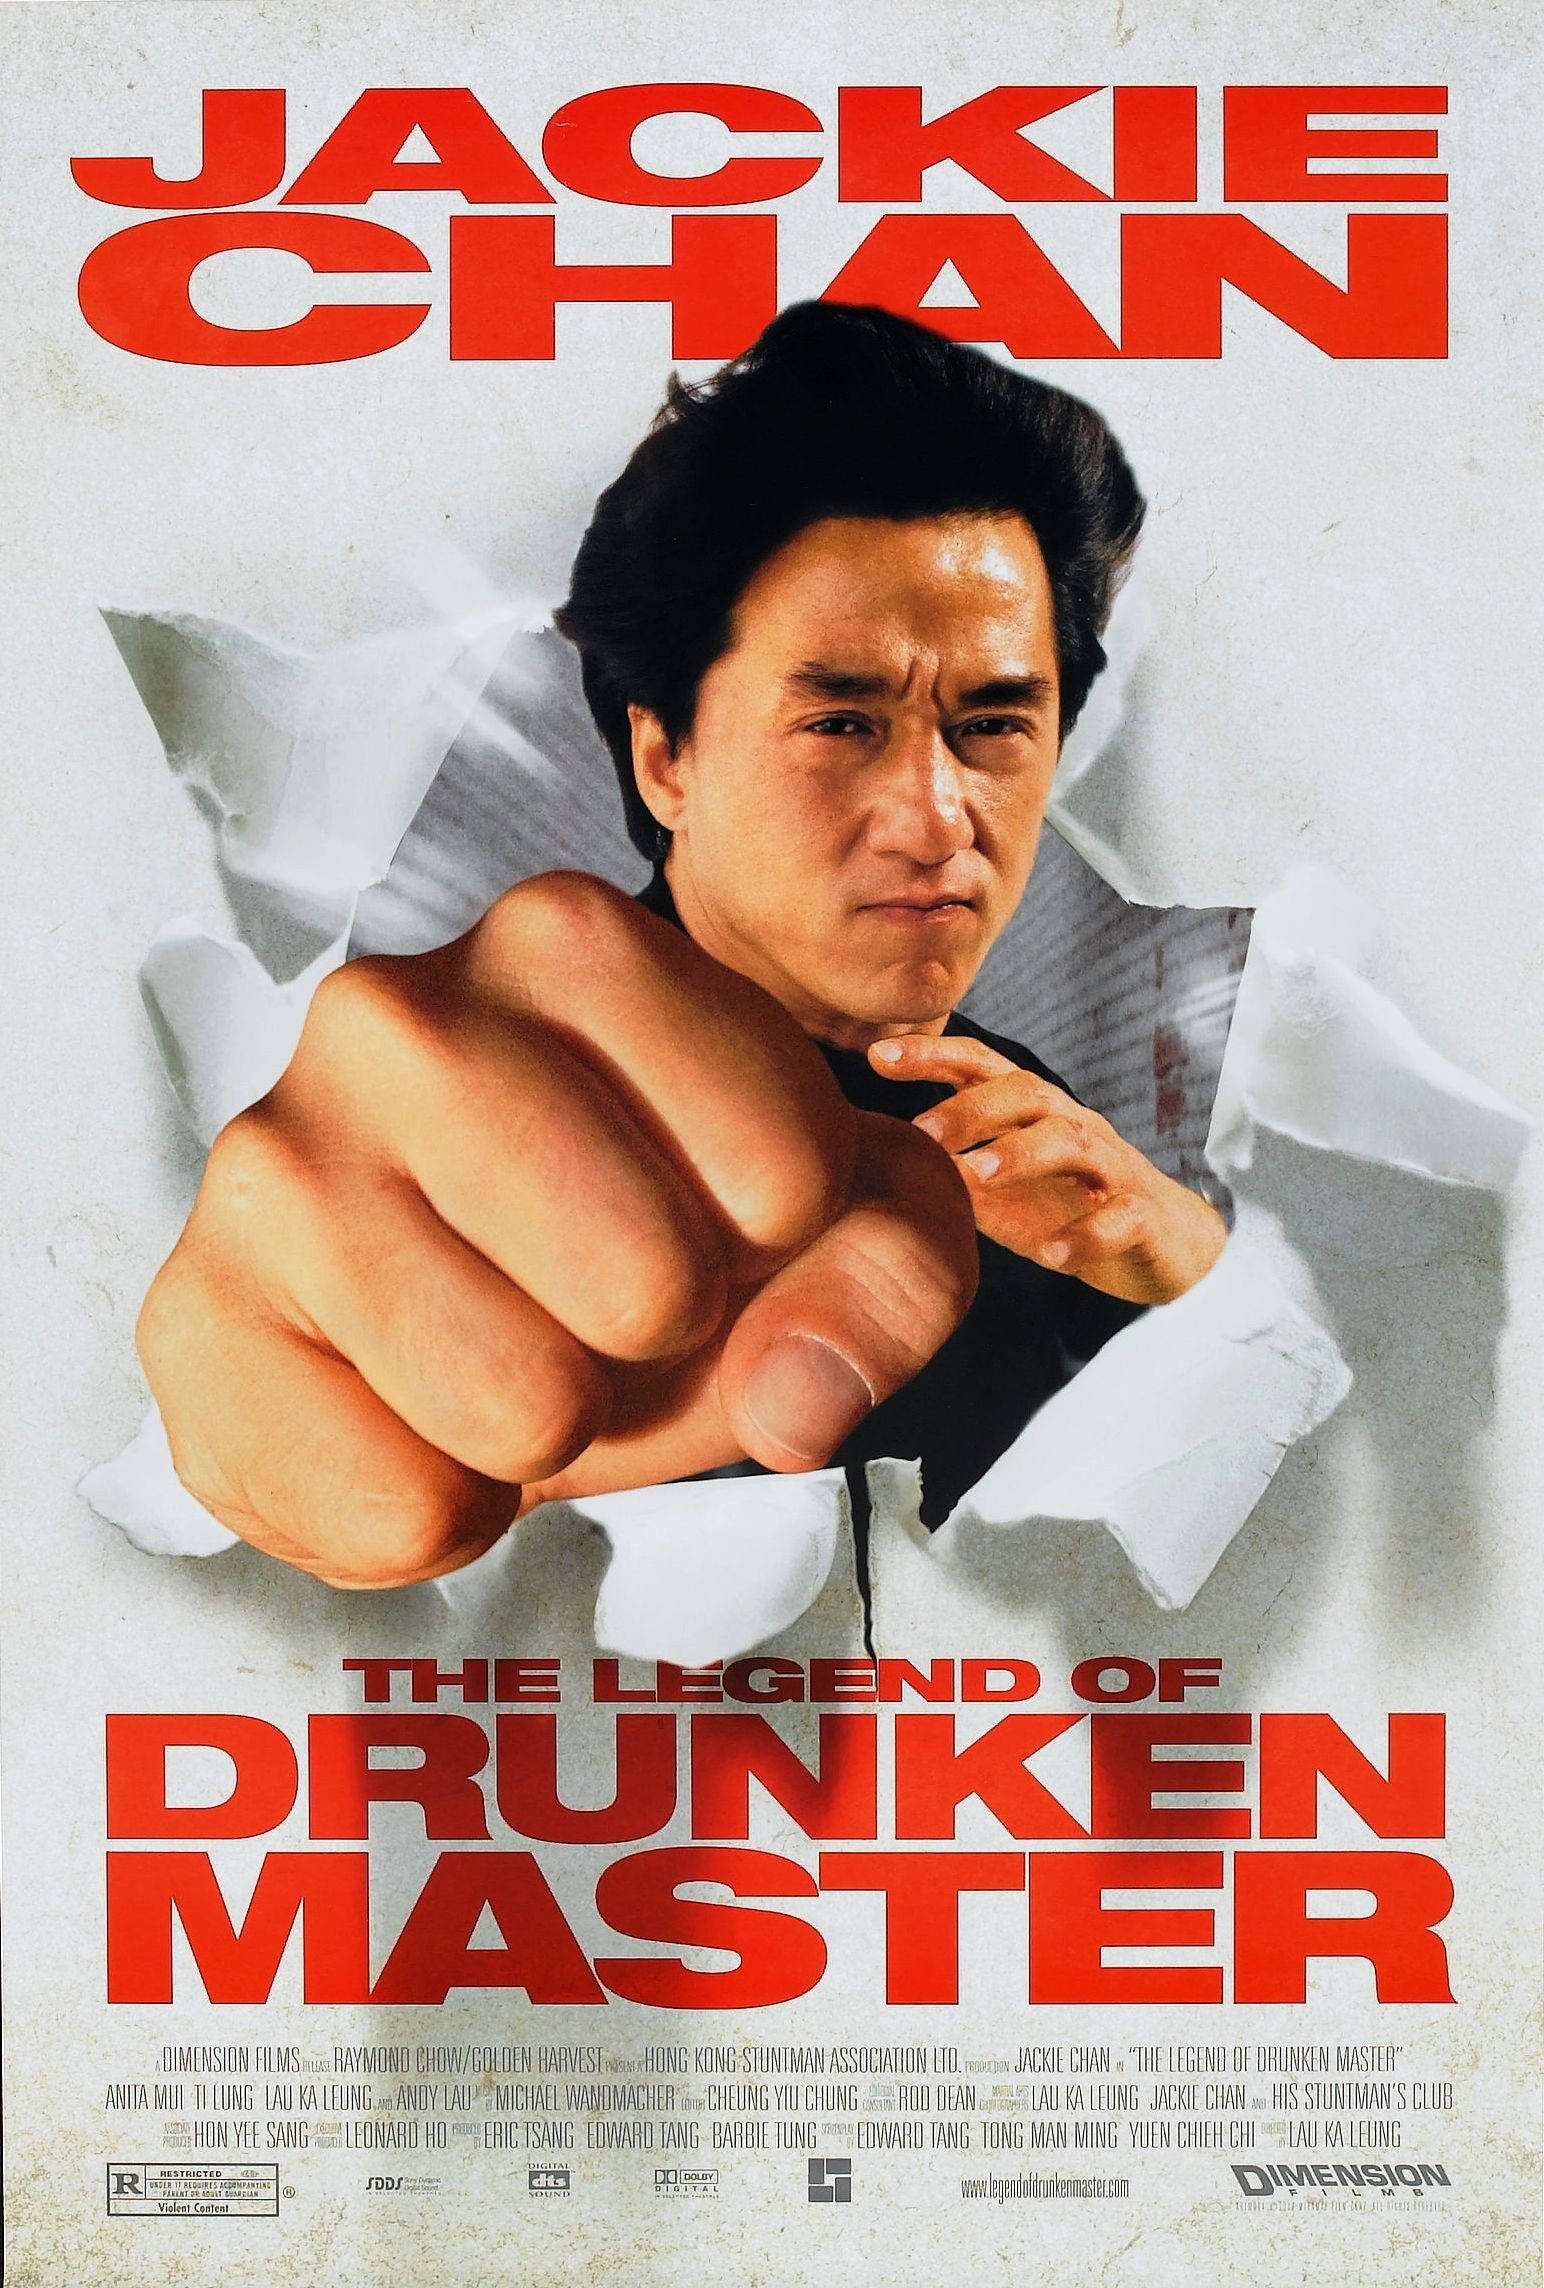 THE LEGEND OF DRUNKEN MASTER [Druken Master II]